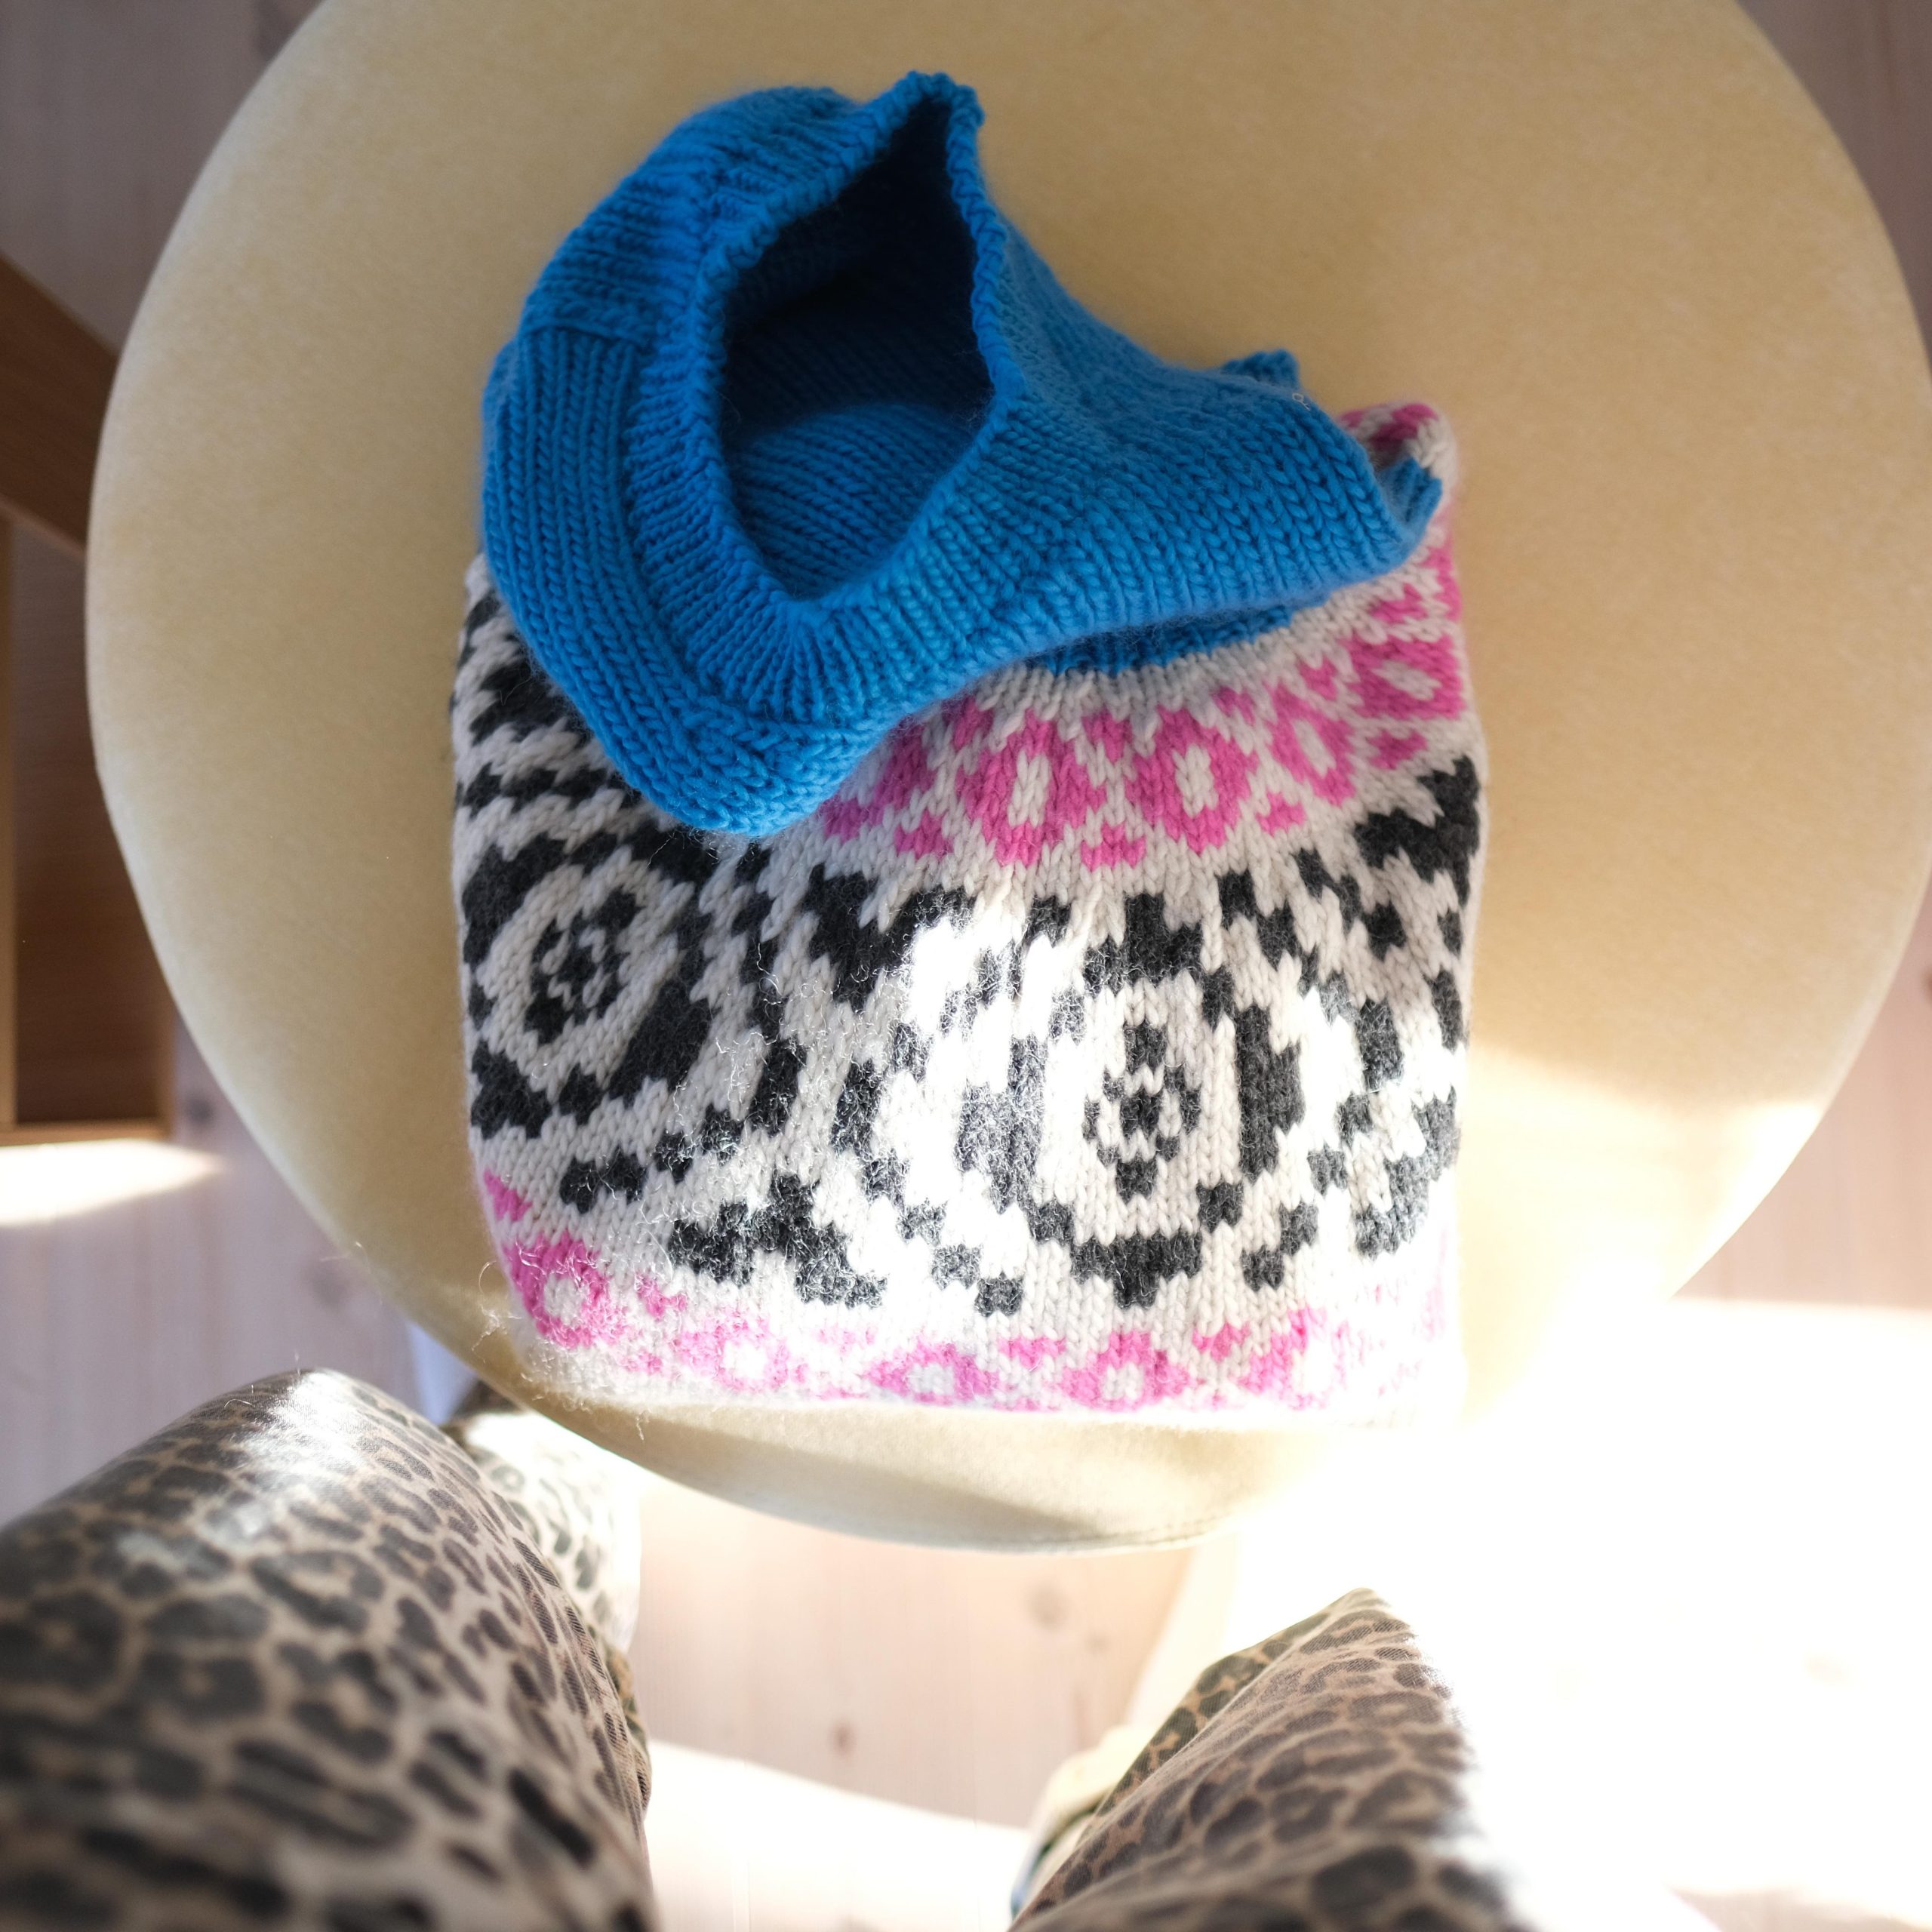  - Roxana | Round yoke sweater with pattern | by HipKnitShop - 25/10/2022